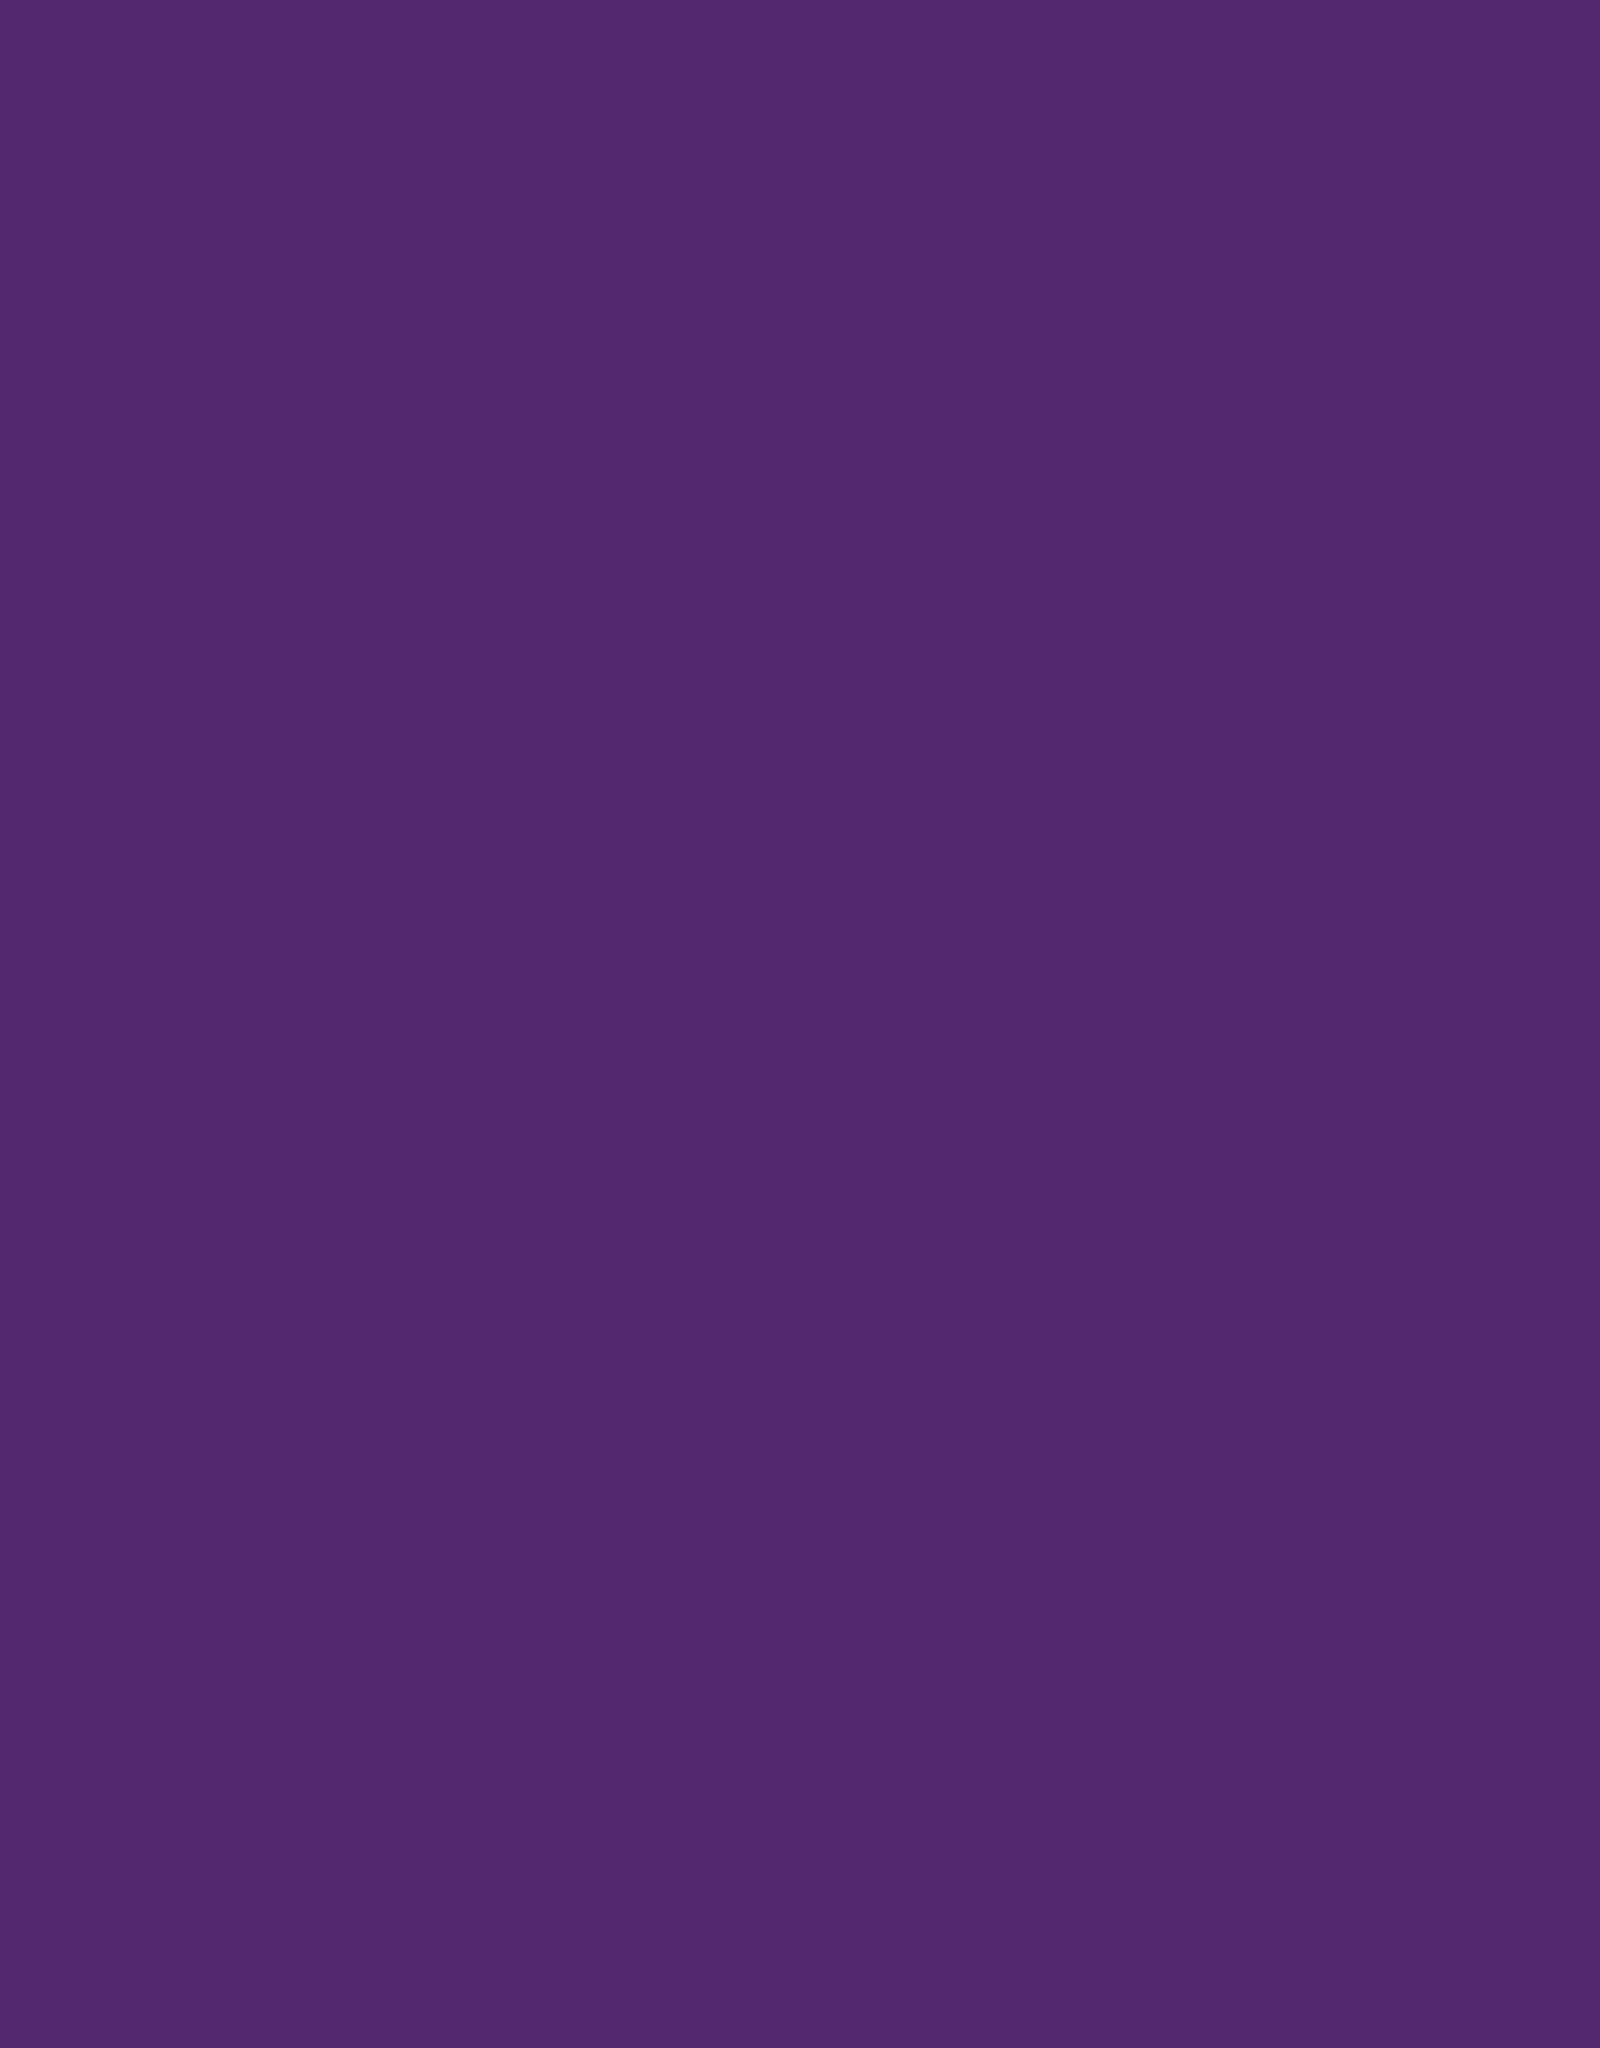 Jacquard Acid Dye Purple